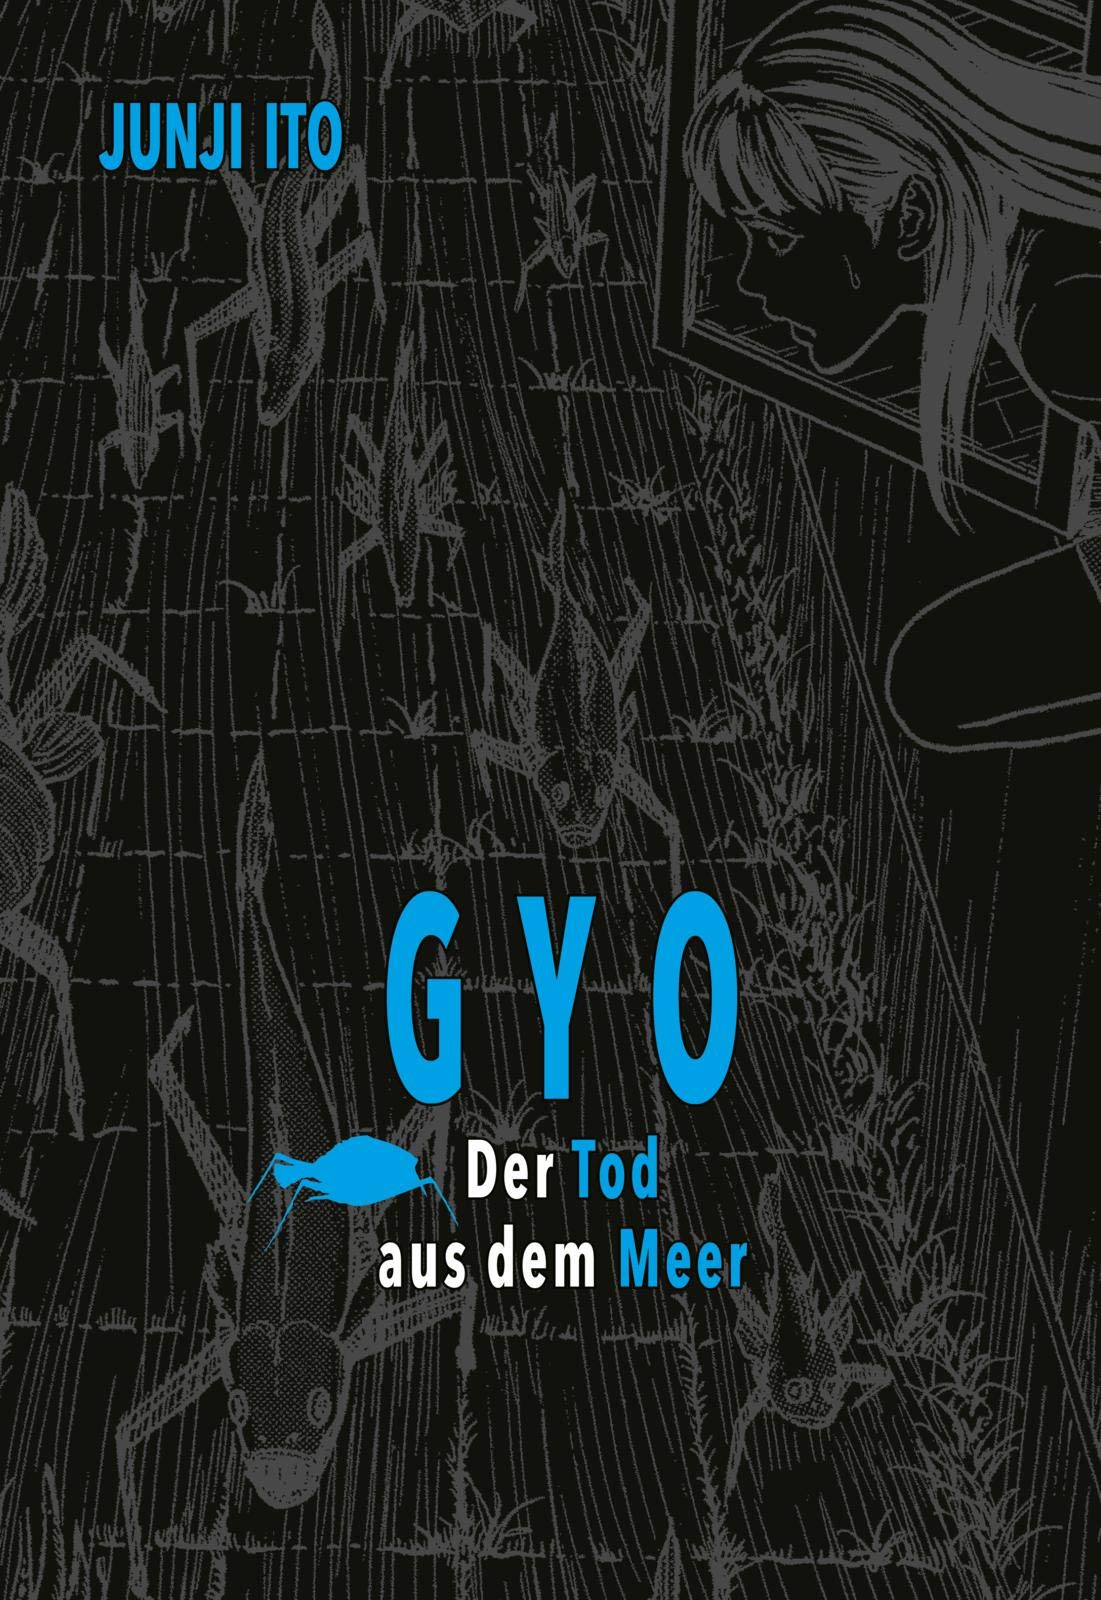 Vezi detalii pentru Gyo Deluxe | Junji Ito